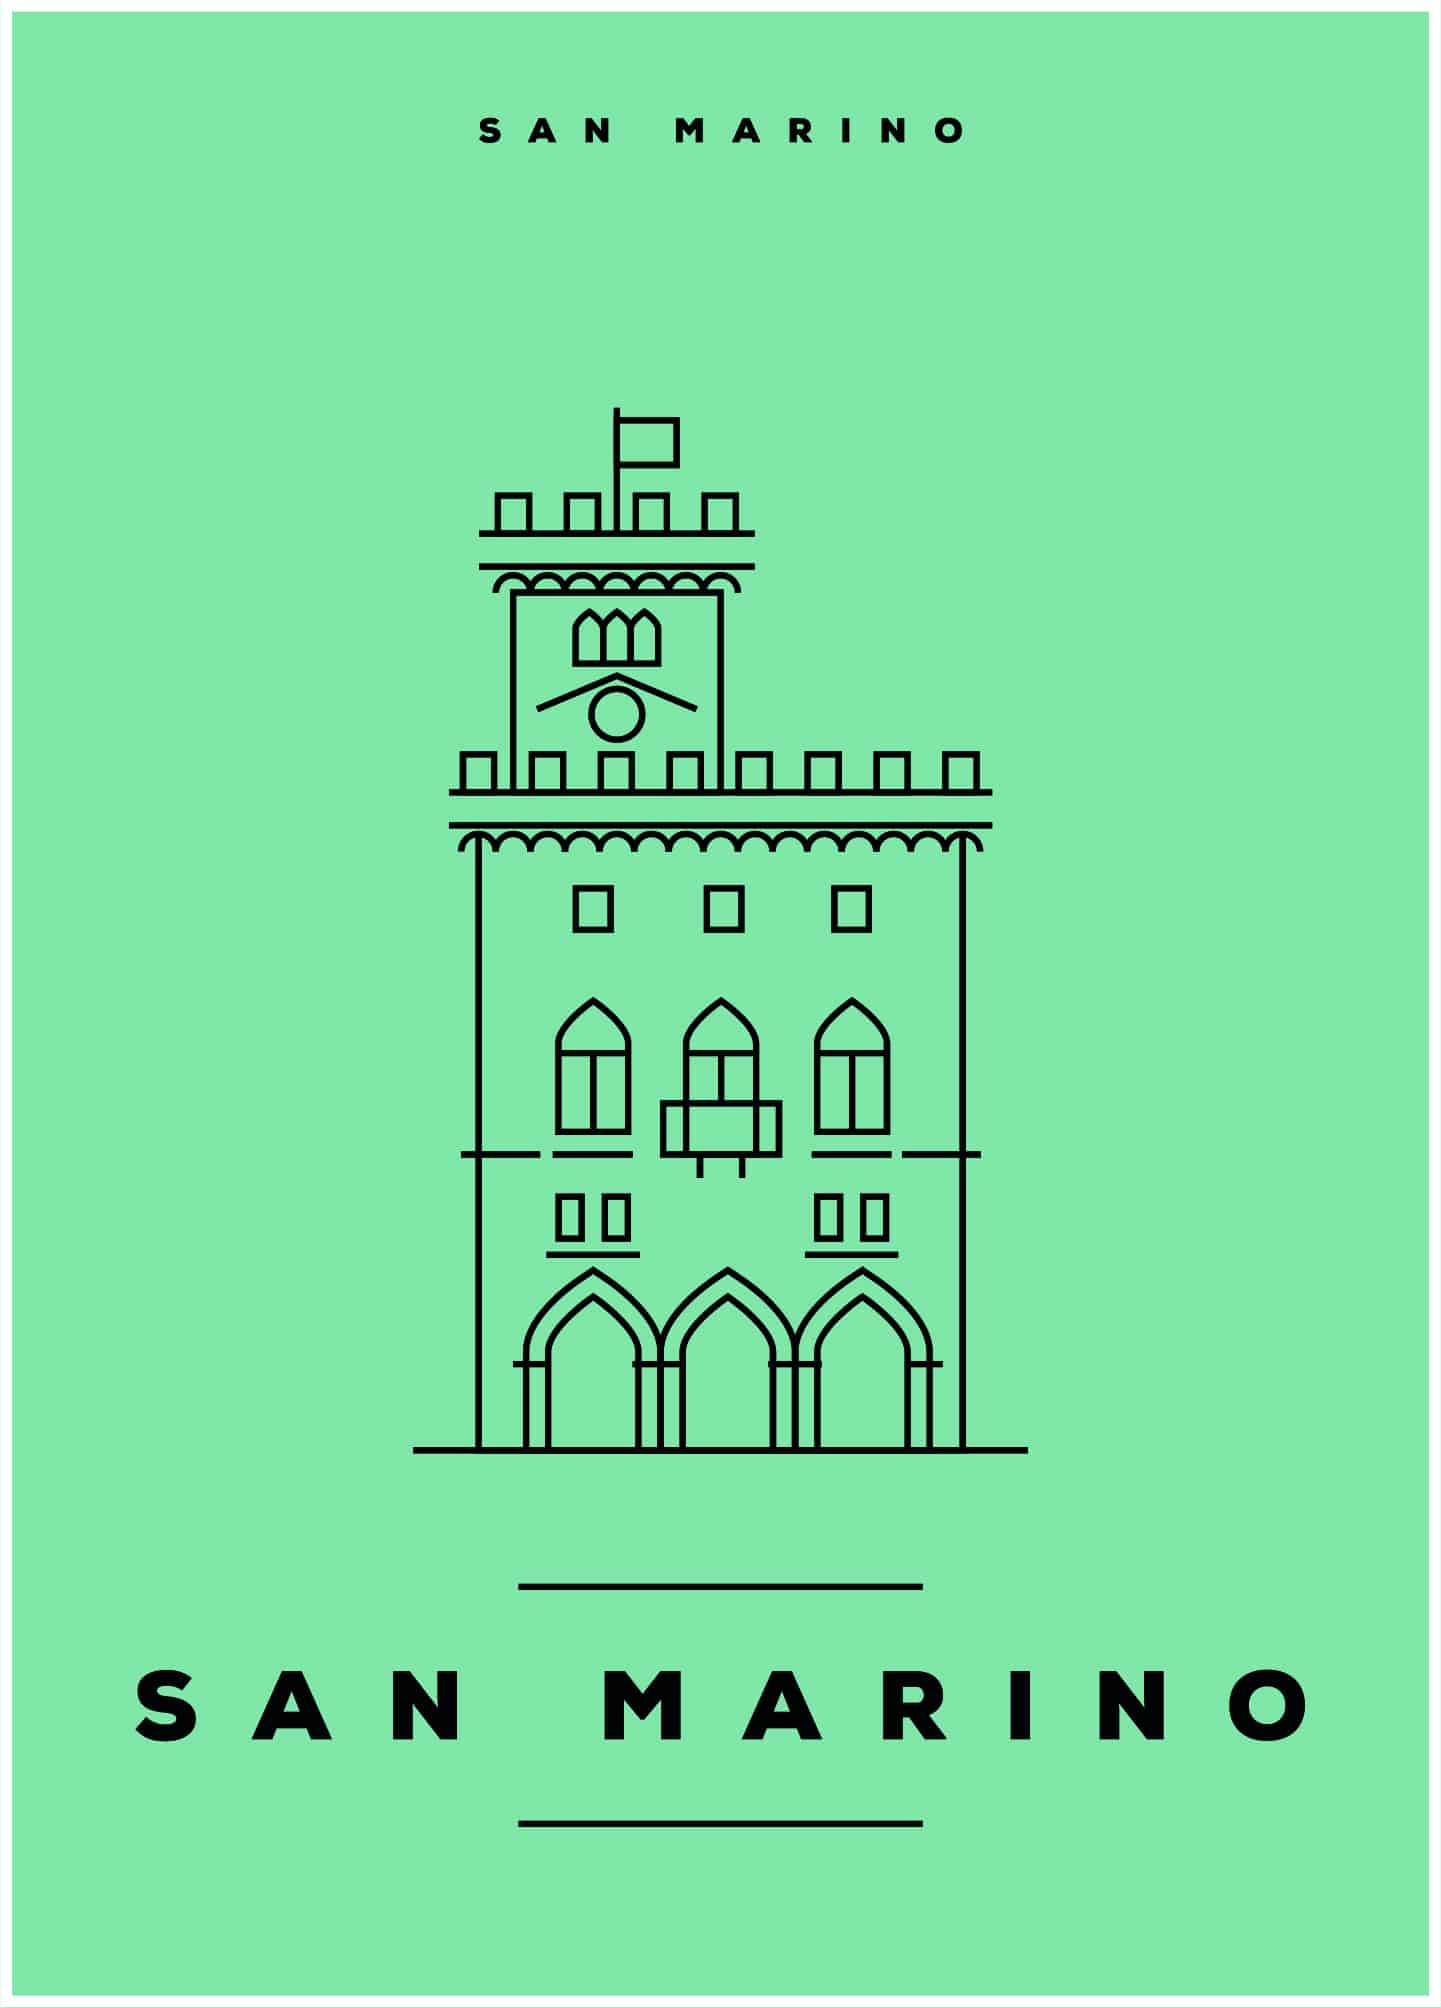 San Marino, San Marino poster